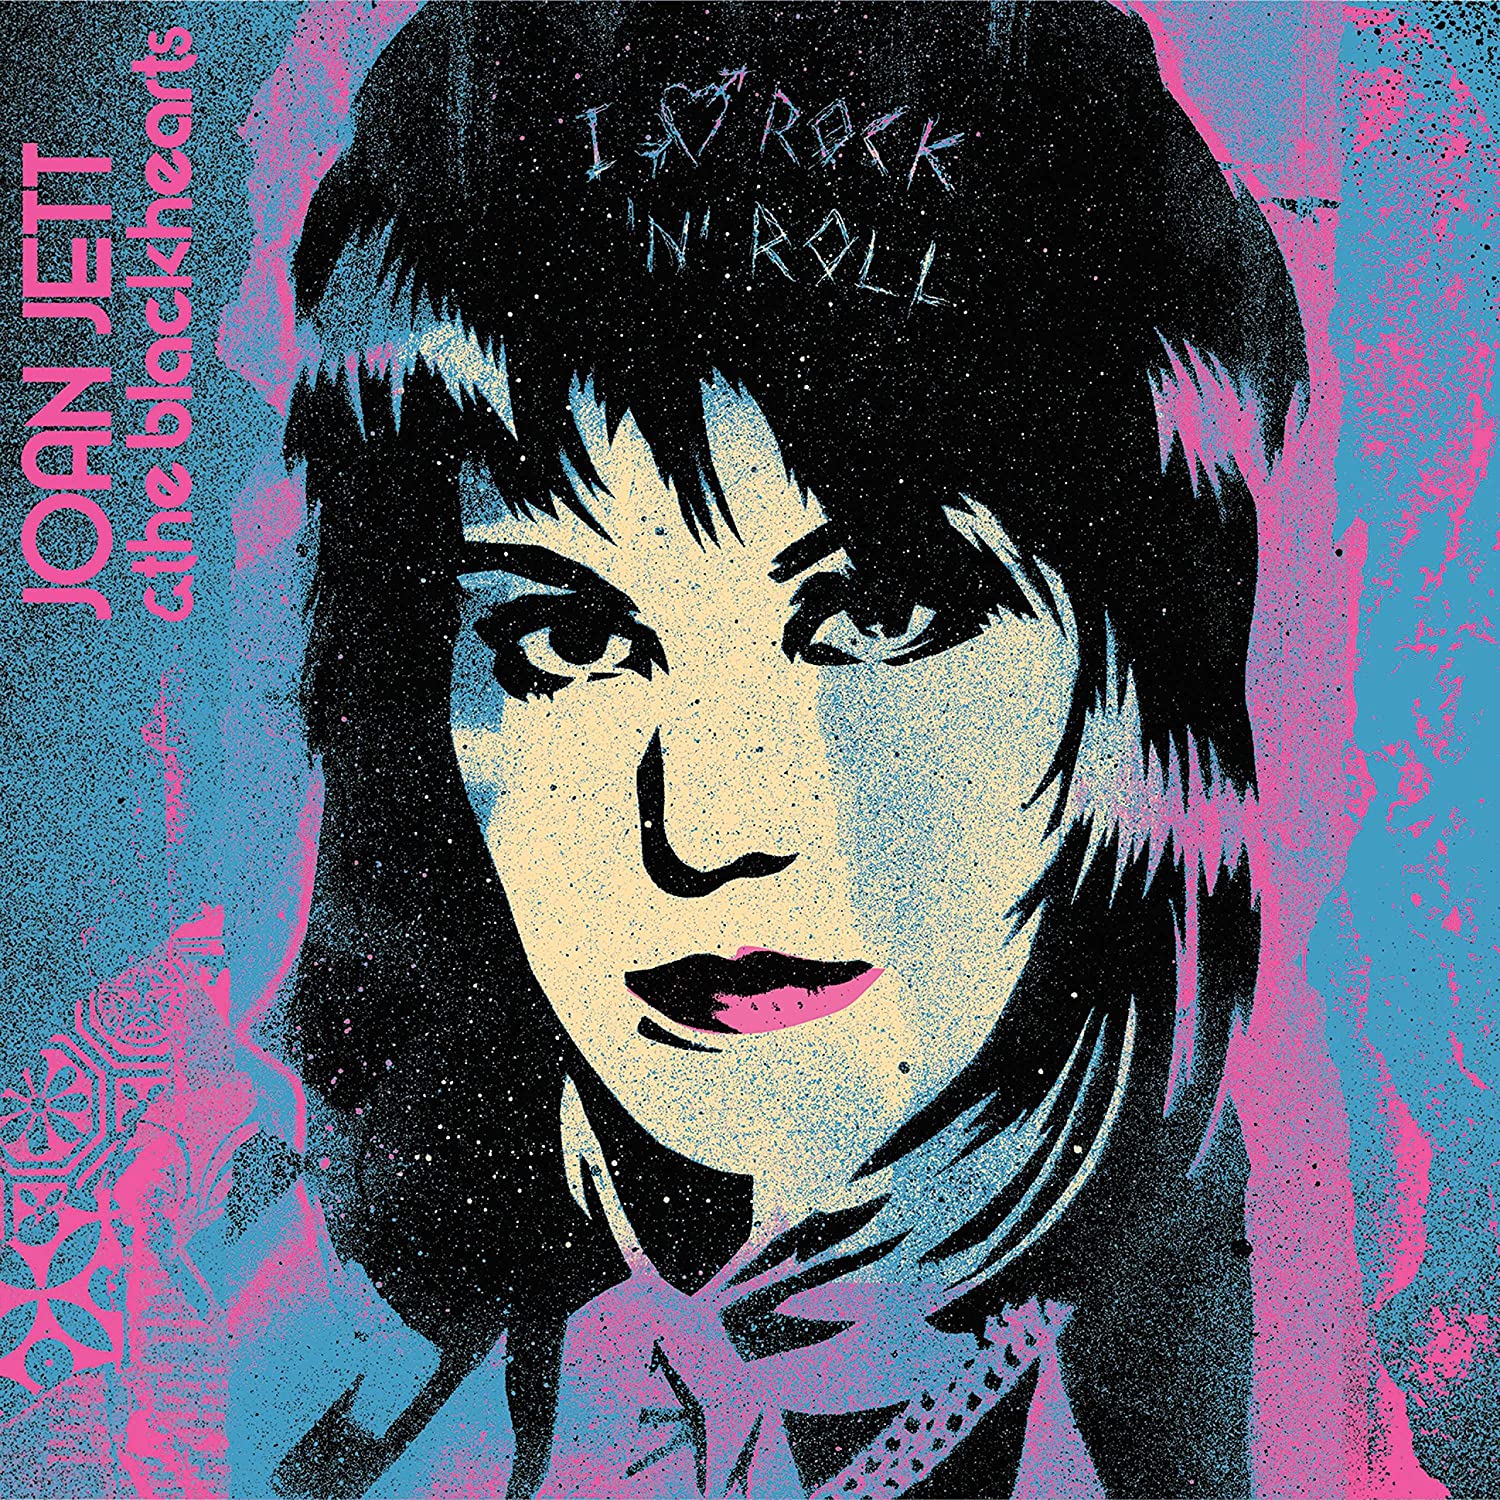 Joan Jett The Blackhearts I Love Rock N Roll 33 1 3 Anniversary Ltd Edn White Vinyl 2lp Retrocrates